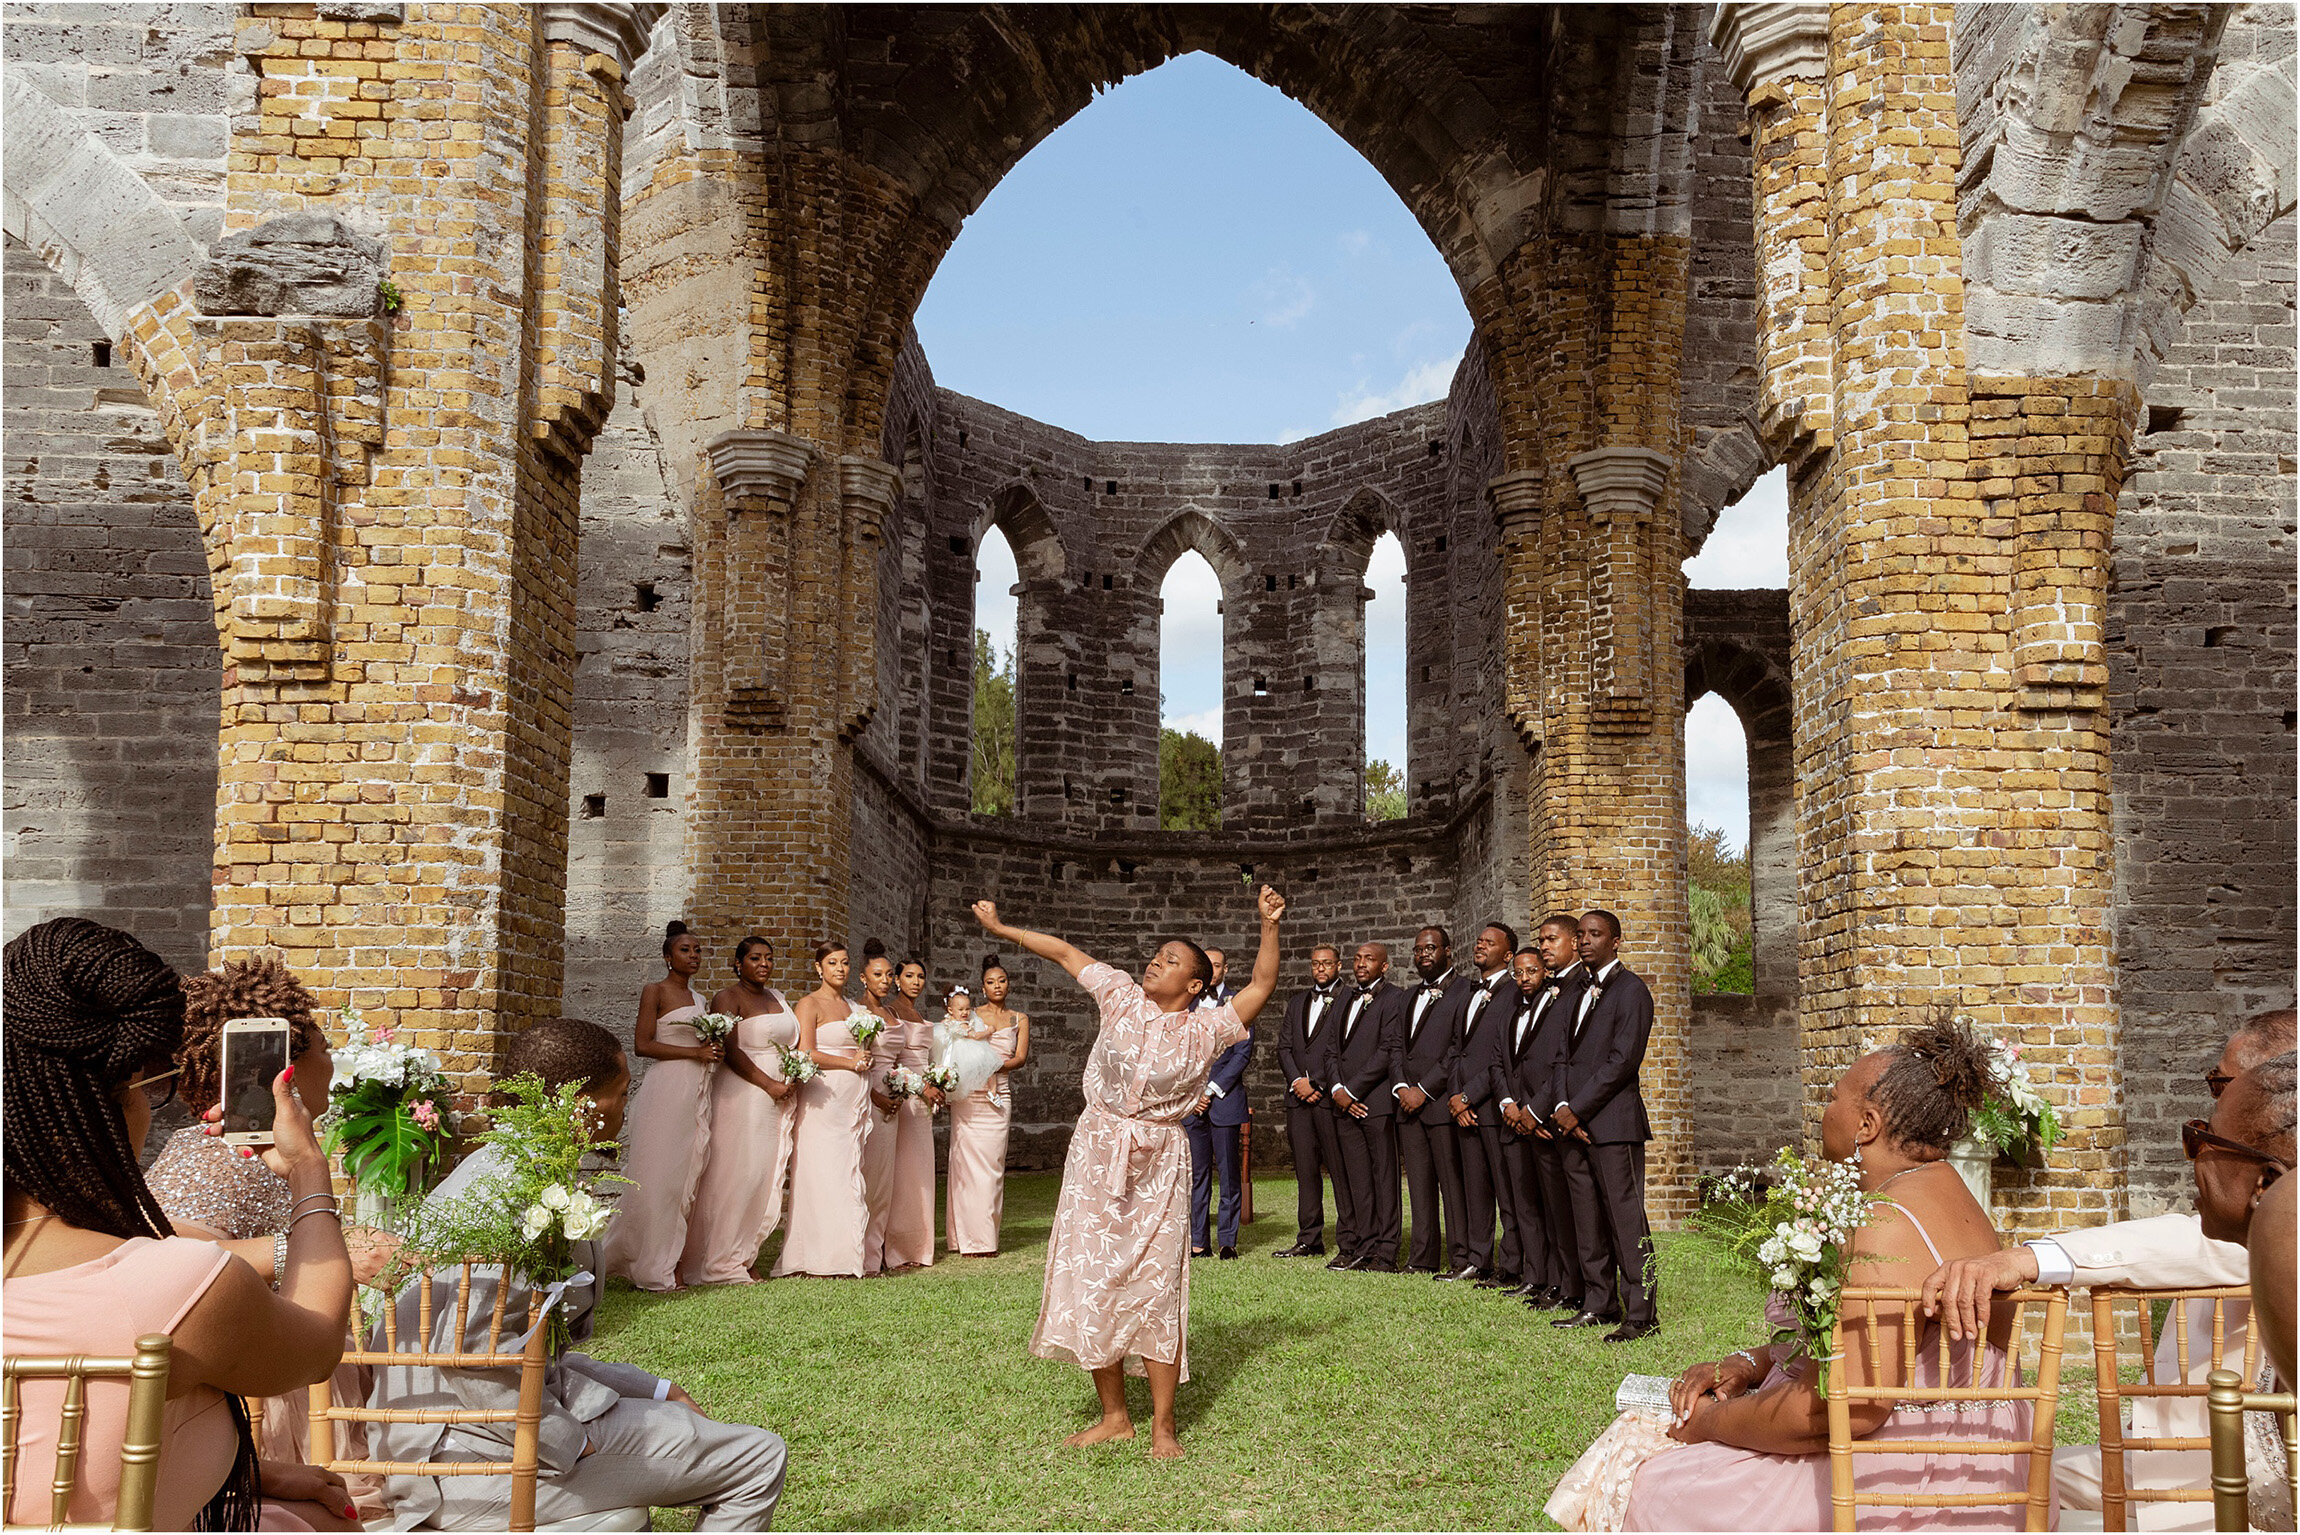 ©FianderFoto_Bermuda_Unfinished Church Wedding Photographer_1.jpg